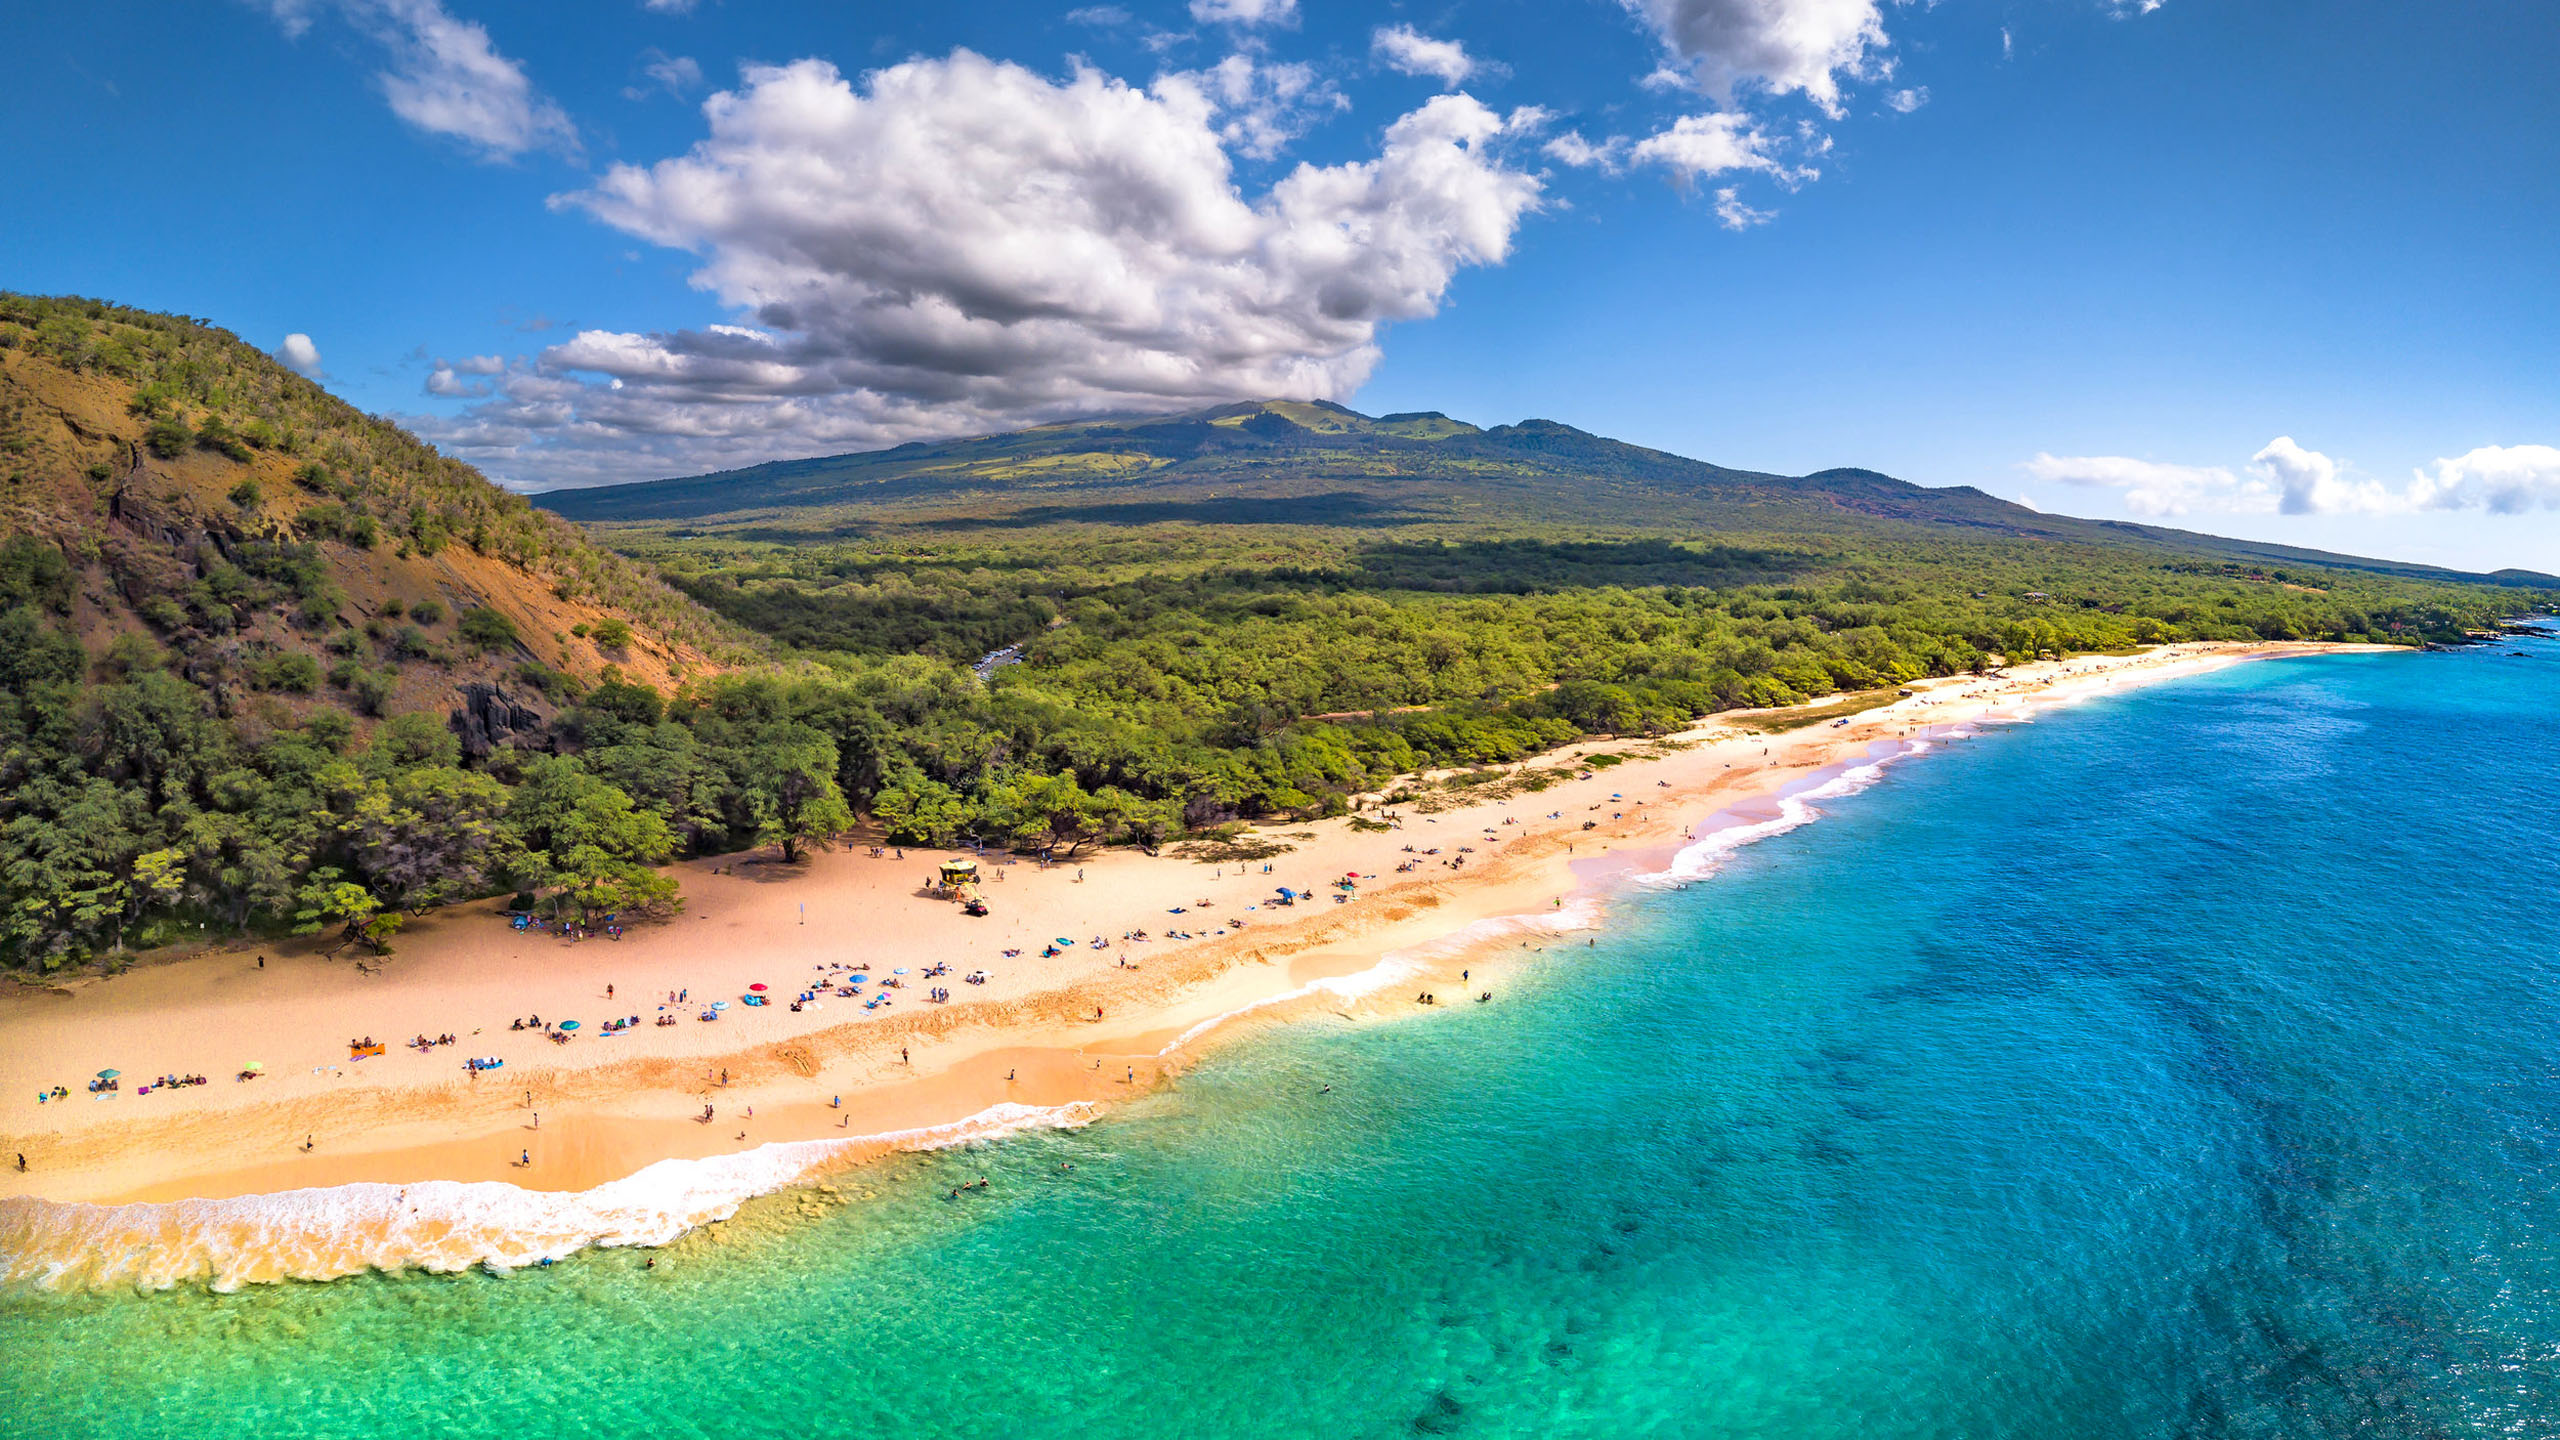 500 Maui Pictures  Download Free Images on Unsplash